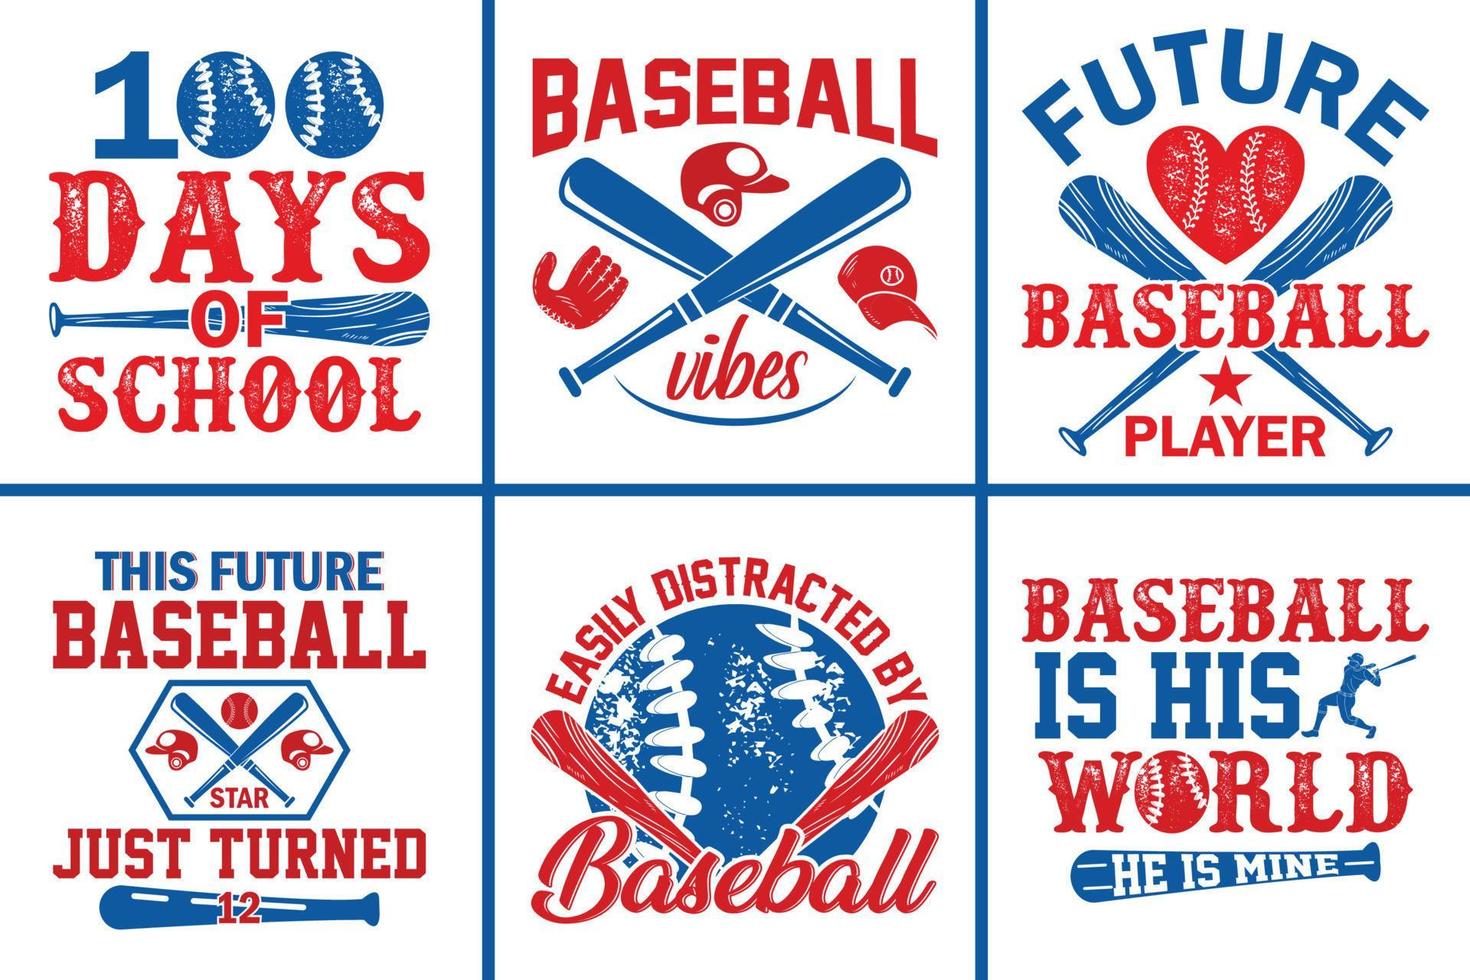 Baseball favorite season t-shirt design vector